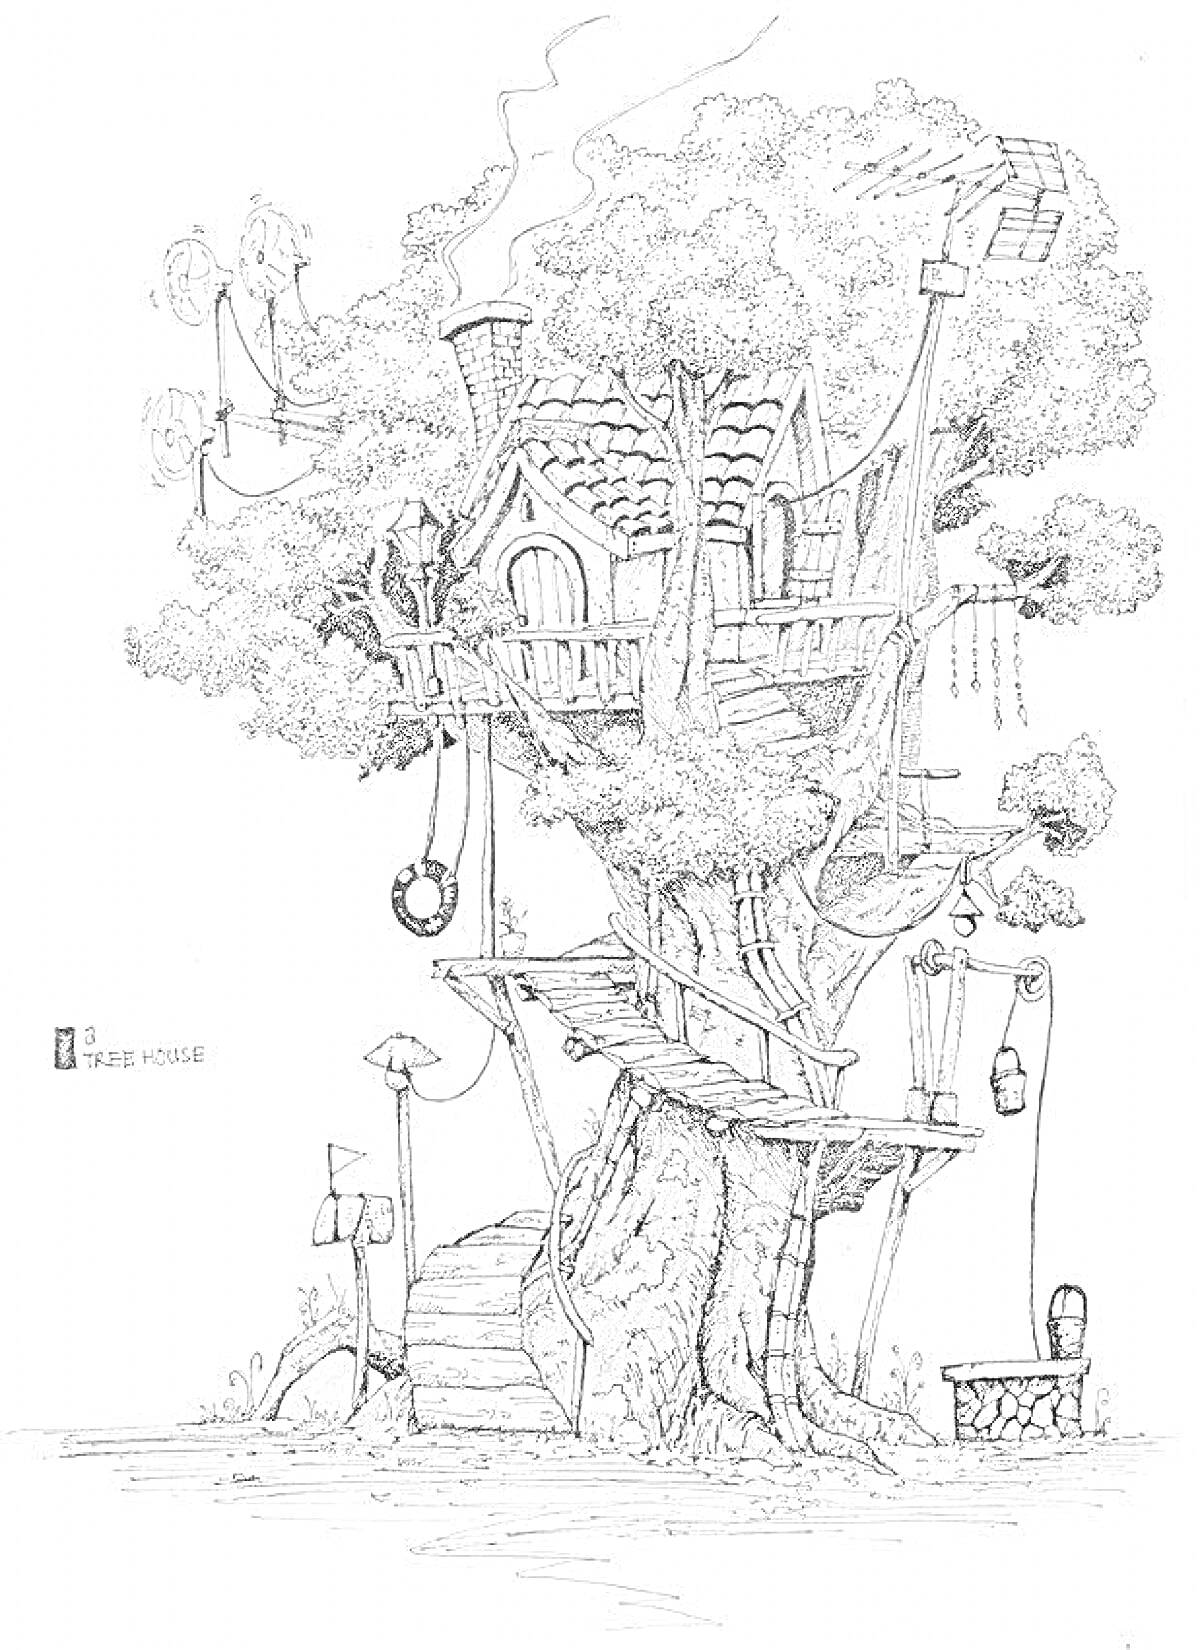 На раскраске изображено: Дом на дереве, Дом, Лестница, Качели, Крыльцо, Колодец, Природа